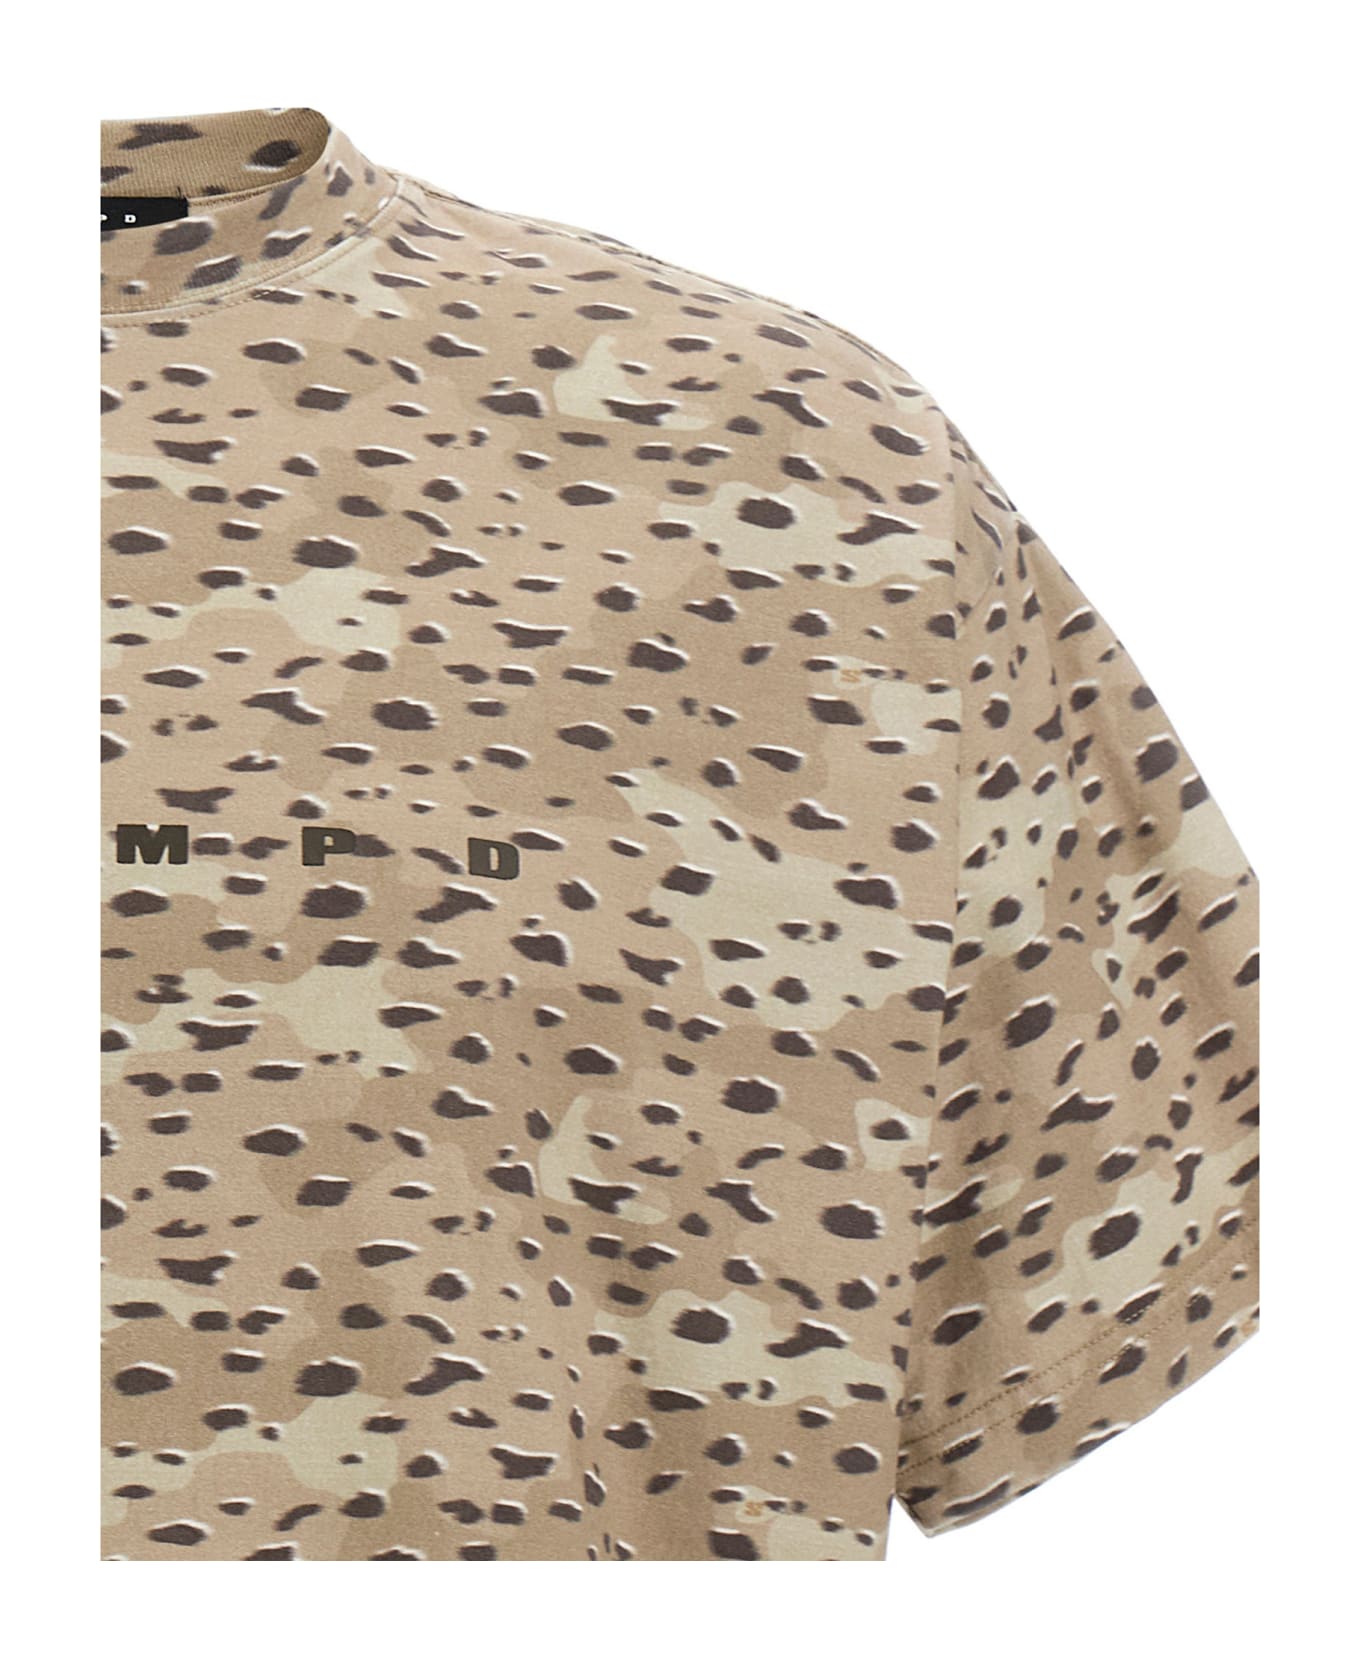 Stampd T-shirt 'camo Leopard' - Beige シャツ